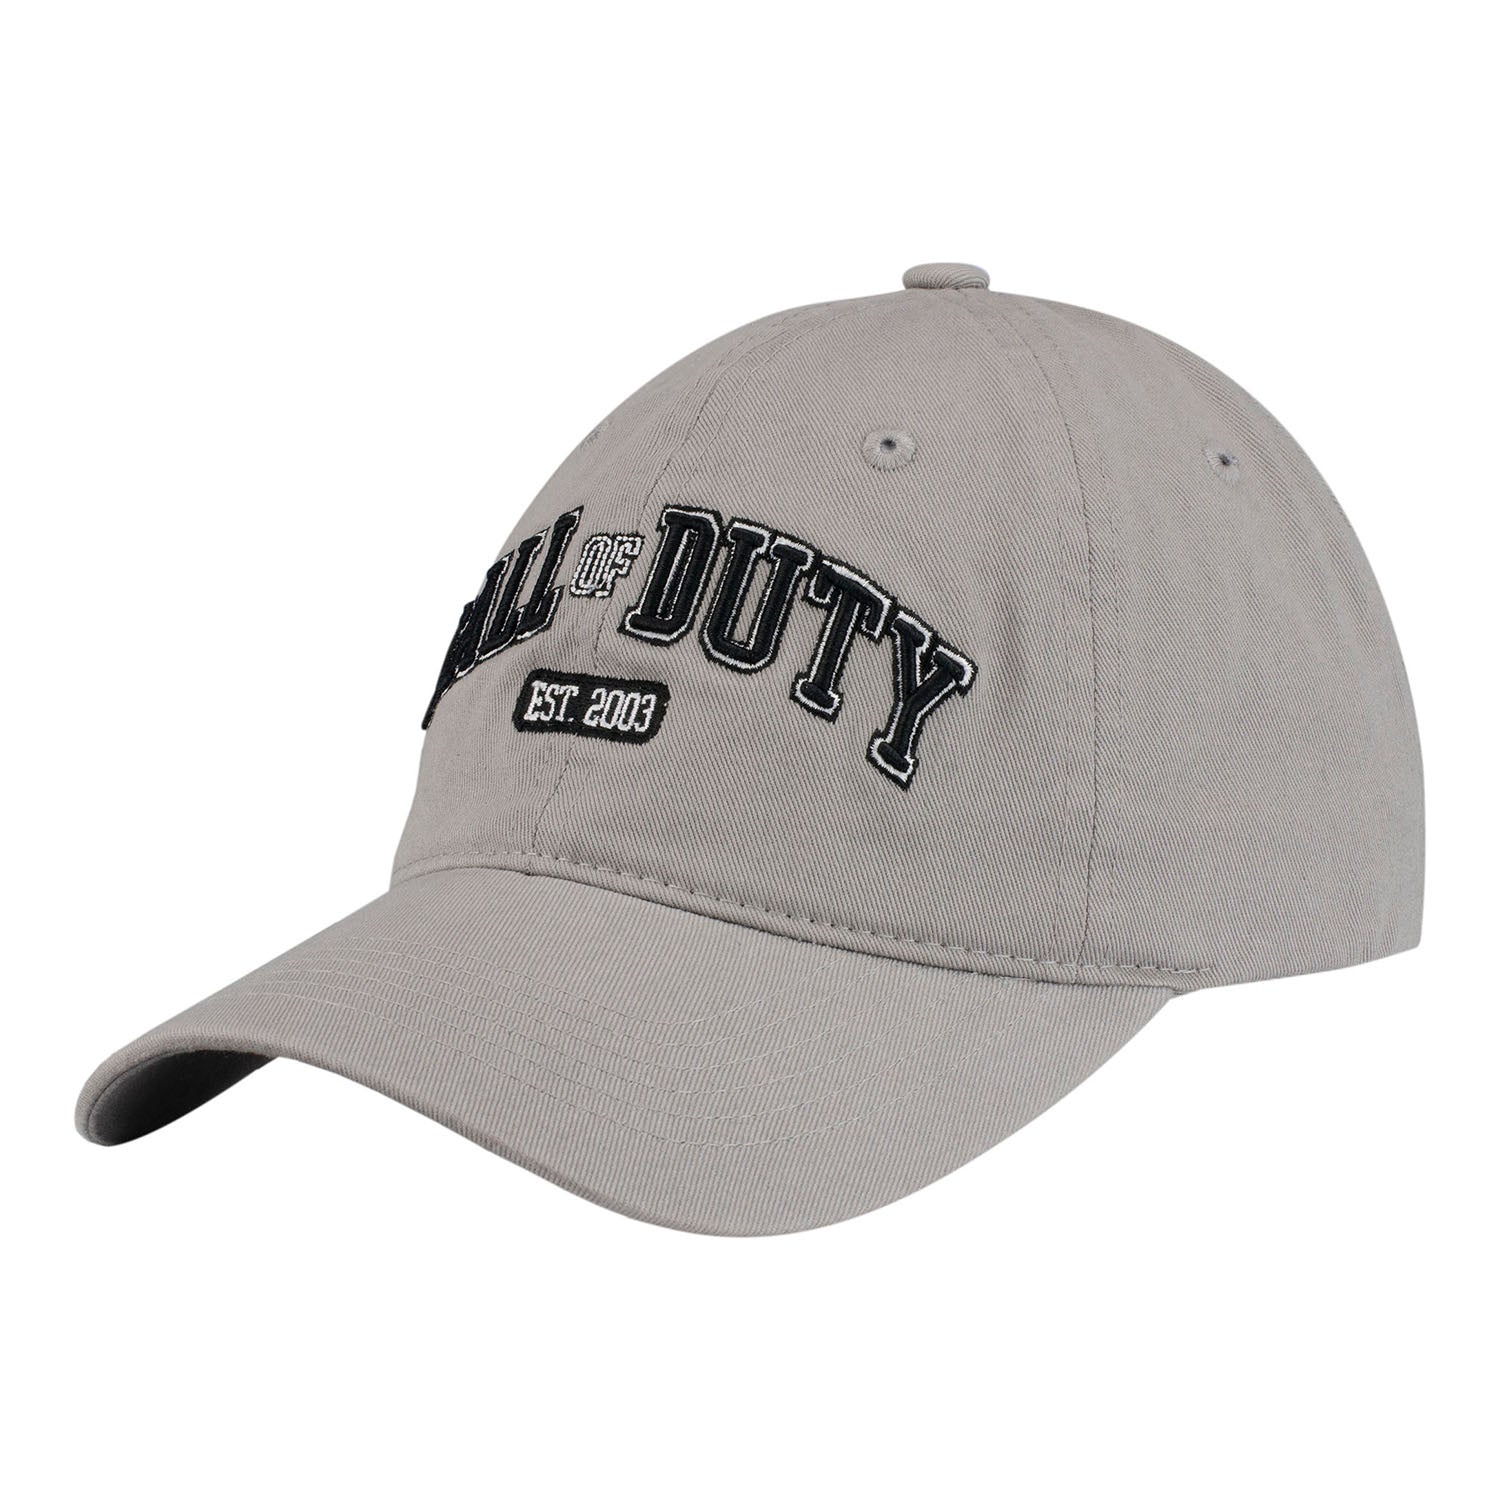 Call of Duty Alumnus Grey Hat - Left View